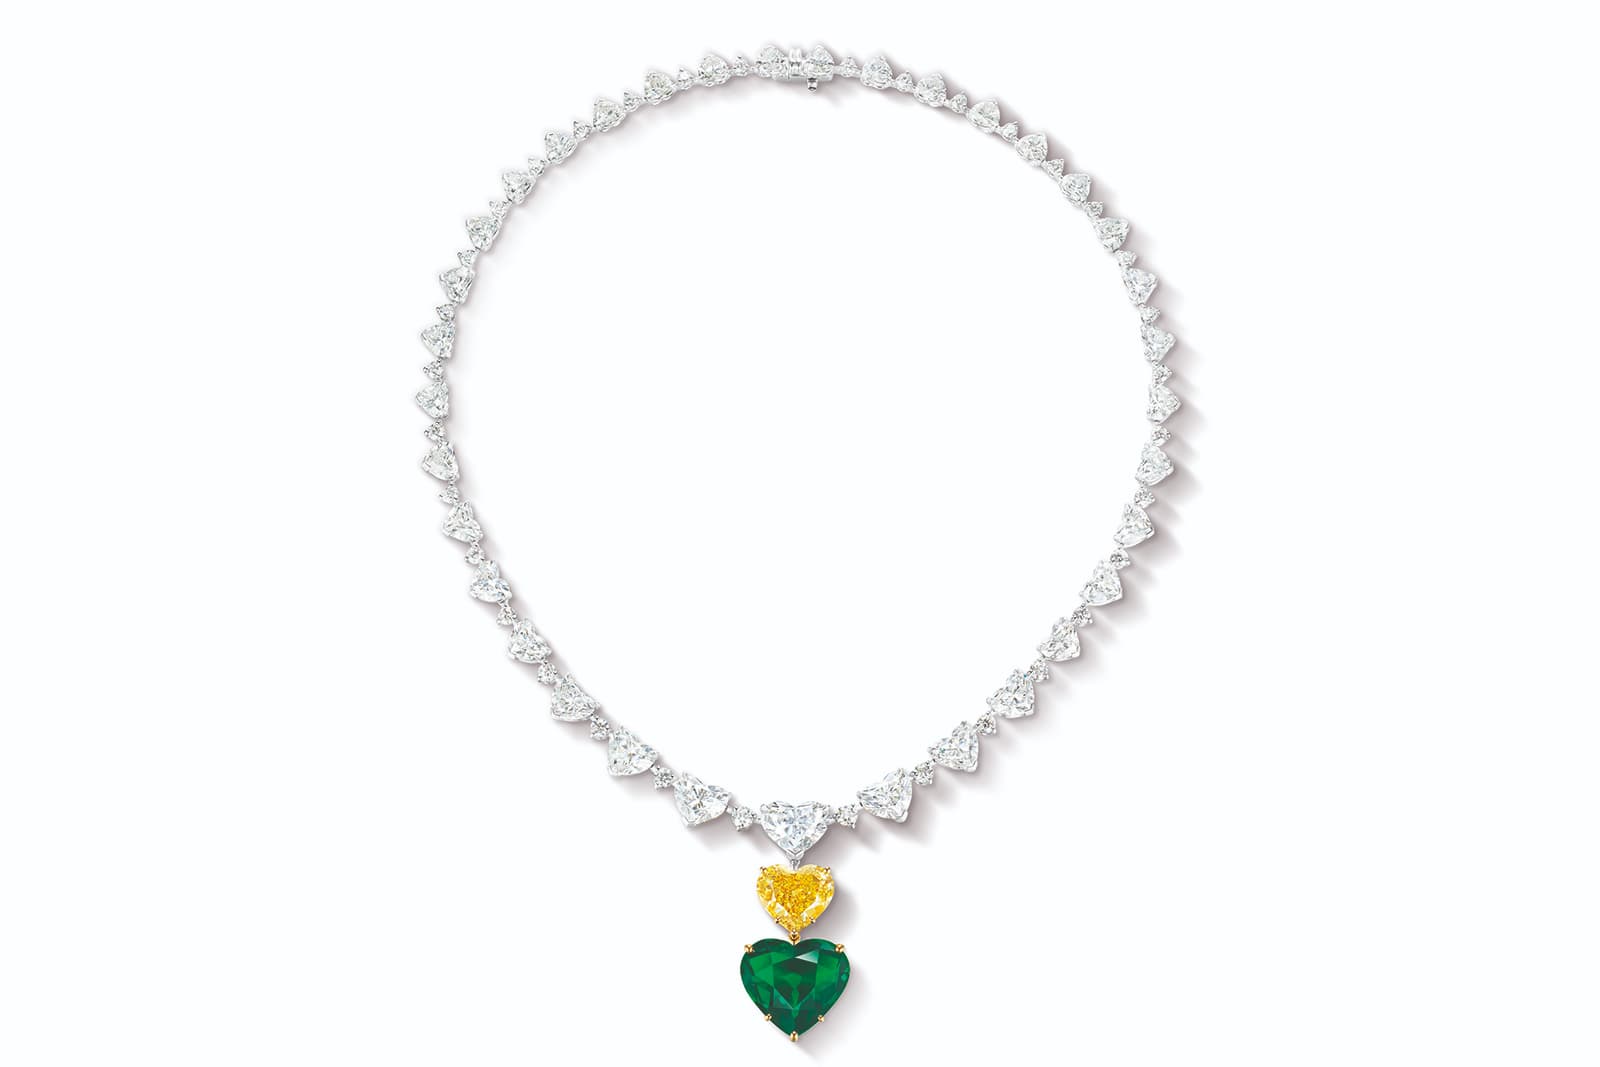 Ronald Abram heart-shape diamond necklace with a 6.34 carat heart-shaped fancy vivid yellow diamond and a 10.88 carat heart-shaped Colombian emerald